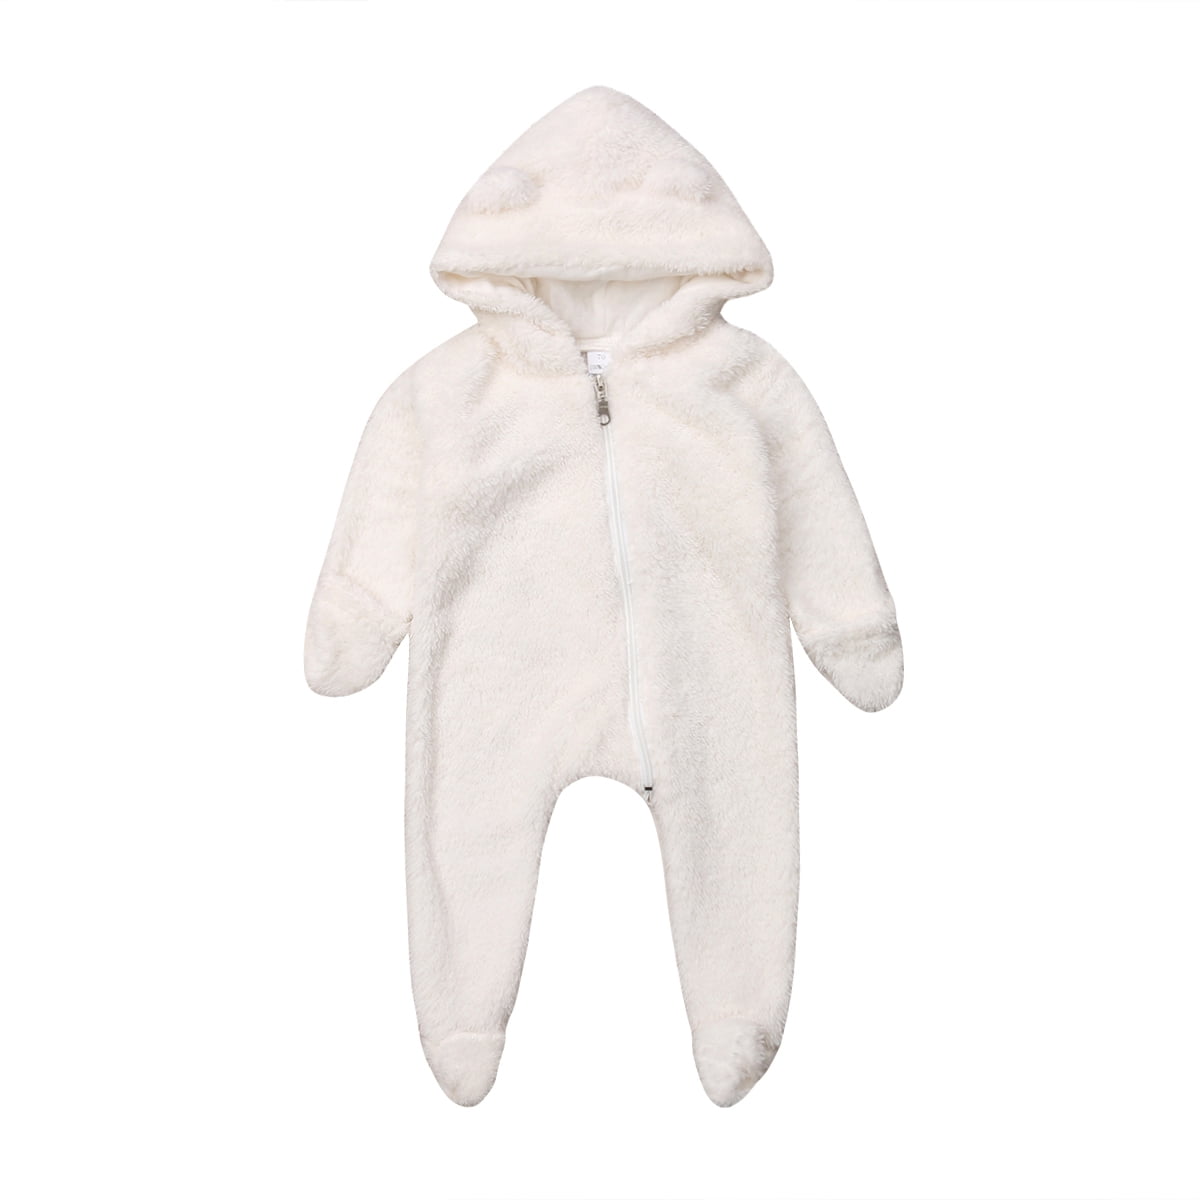 Newborn Infant Unisex Baby Thicken Fleece Coveralls Romper Hooded ...